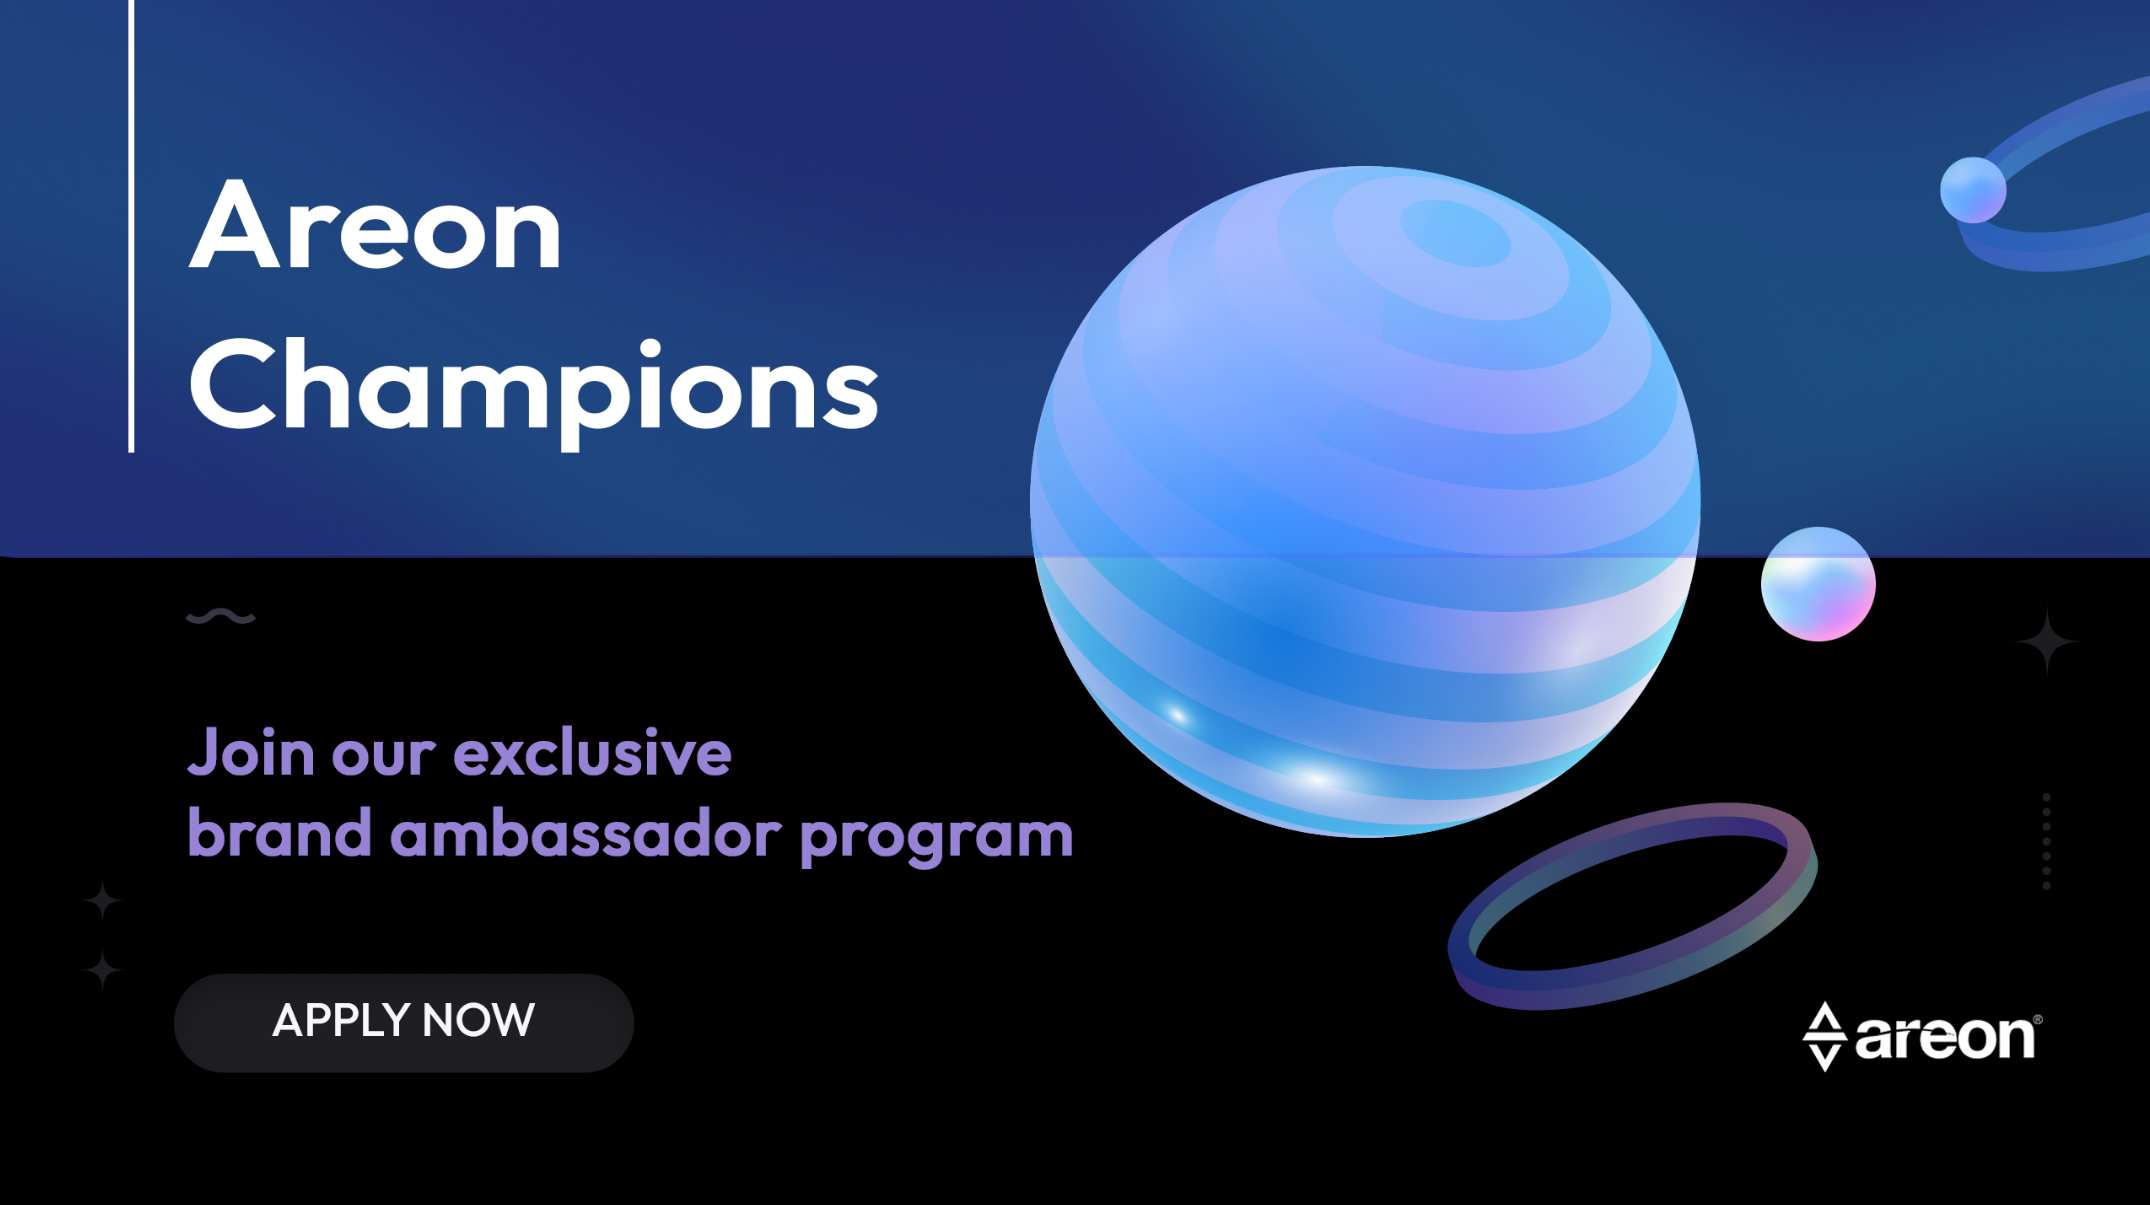 Areon Champions: Brand Ambassador Program